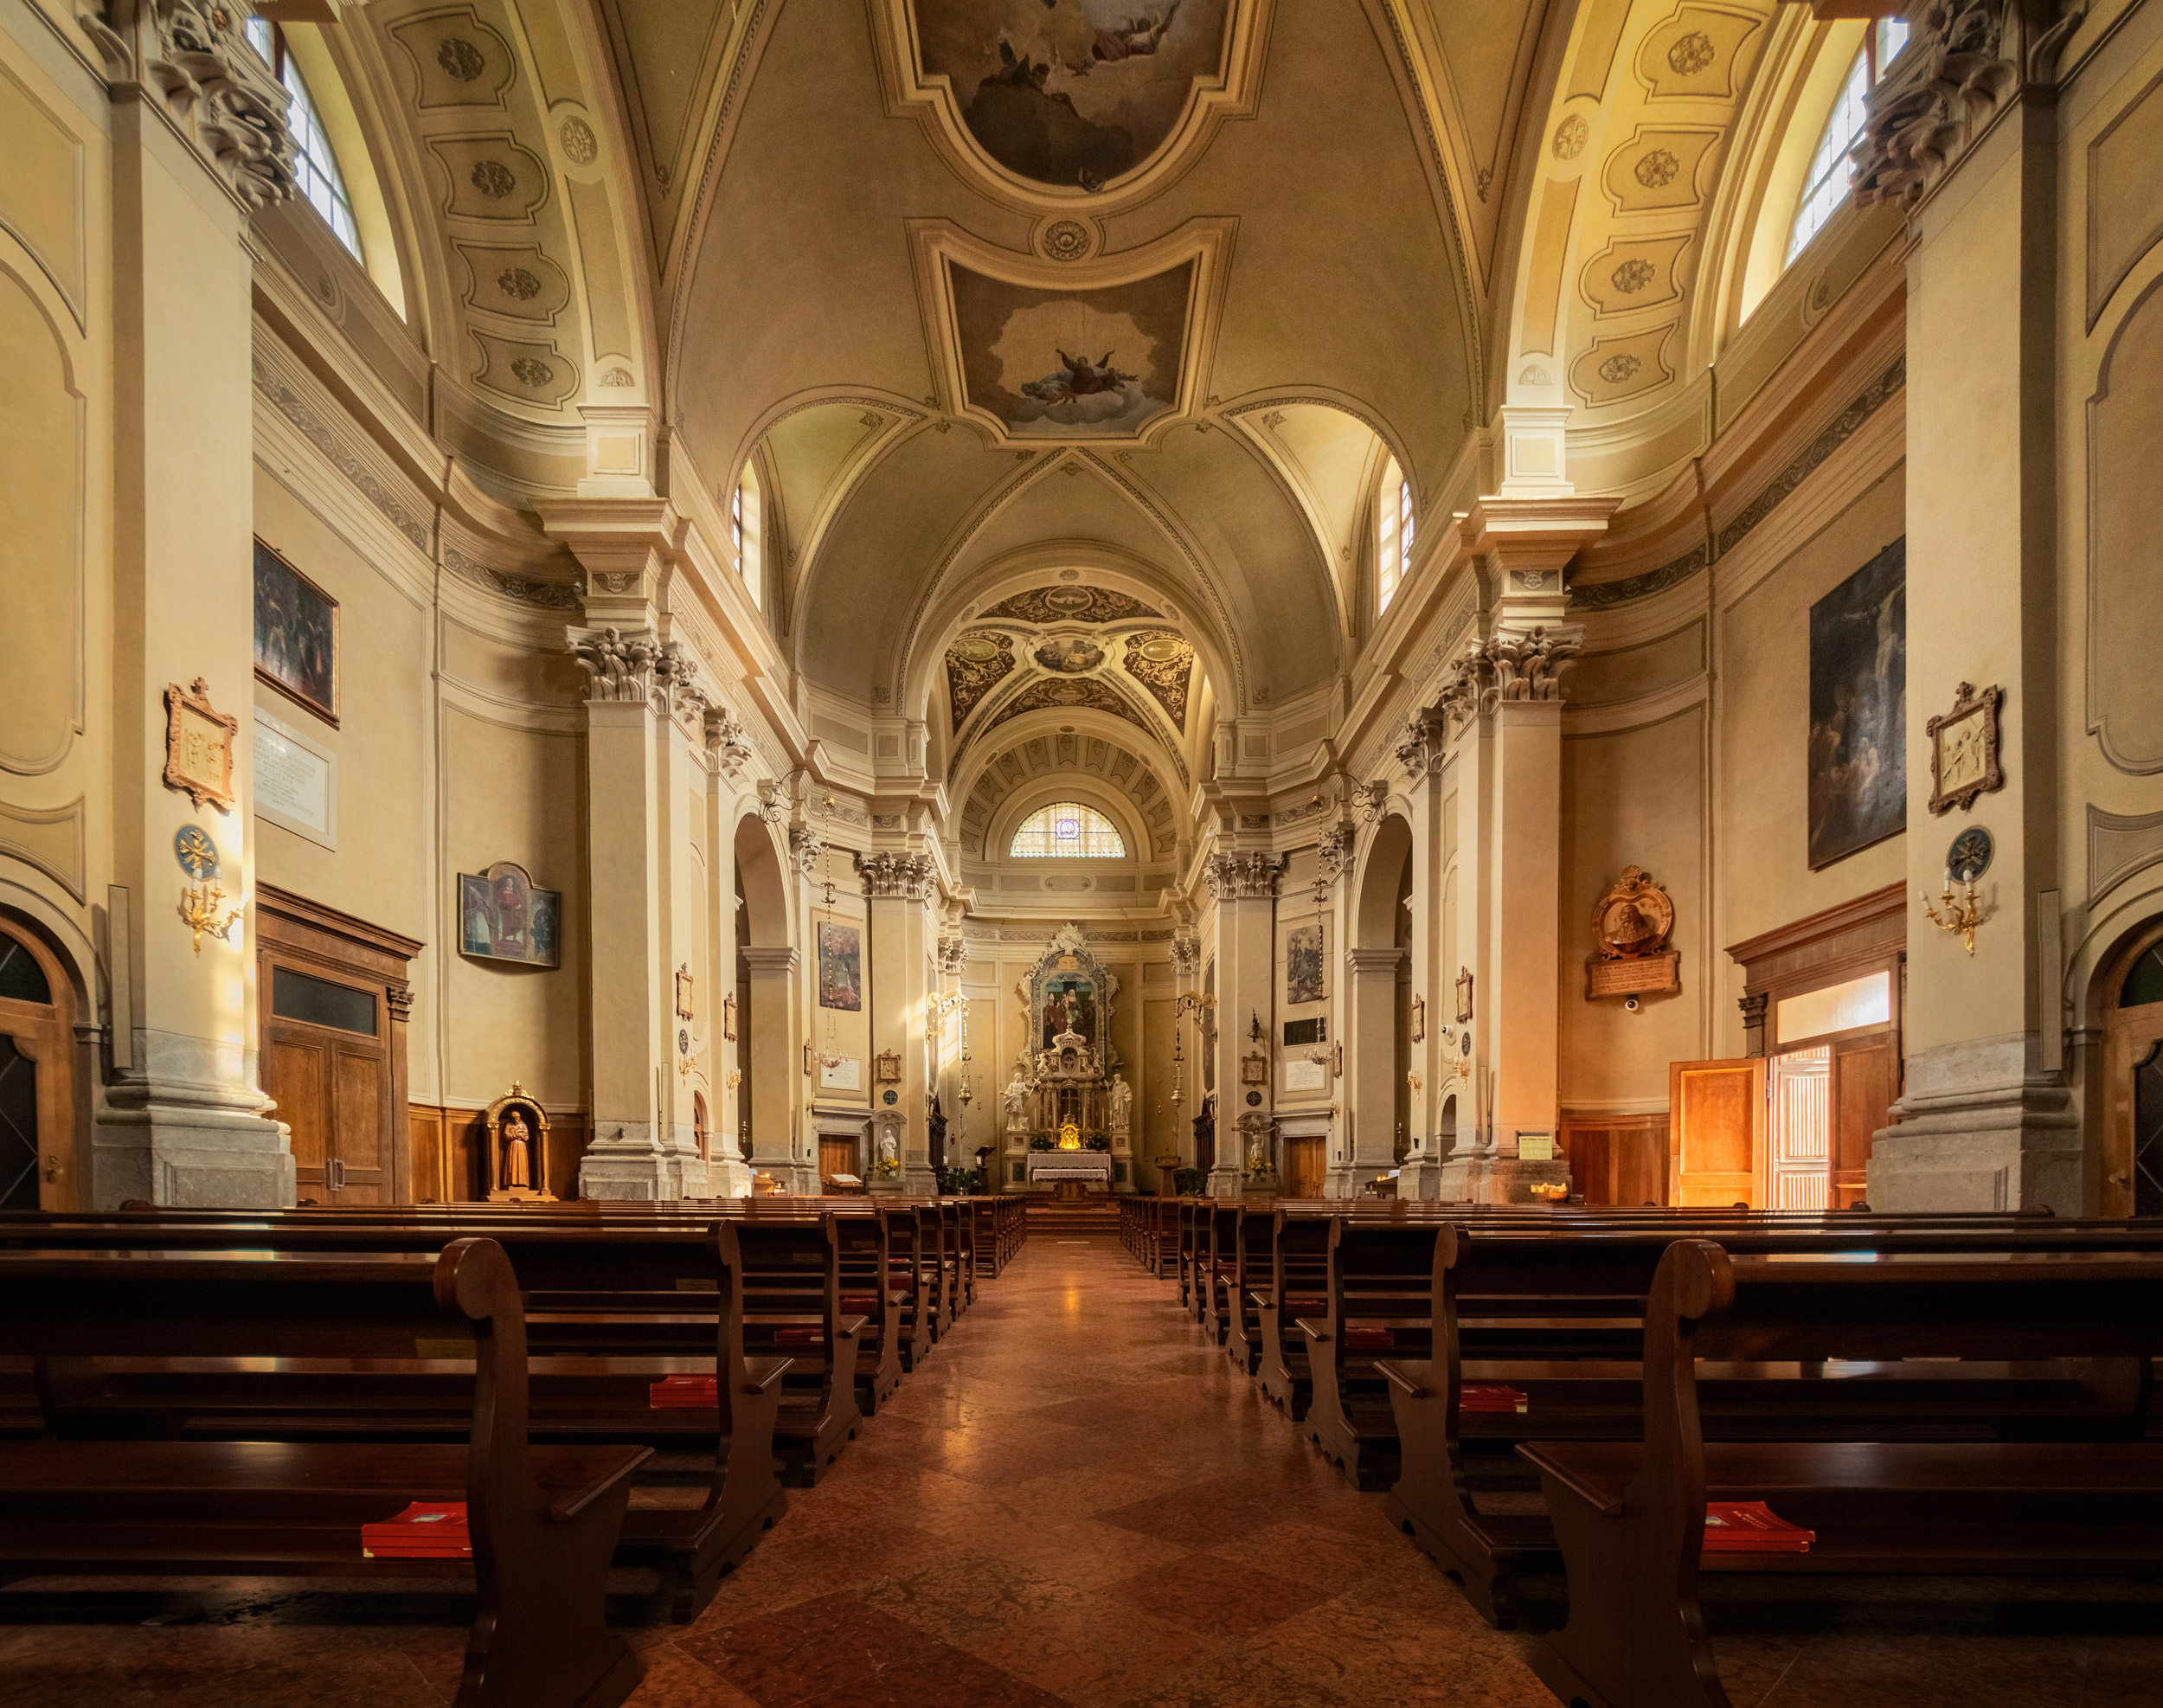 Beautiful interior of church of Saints Vito, Italy